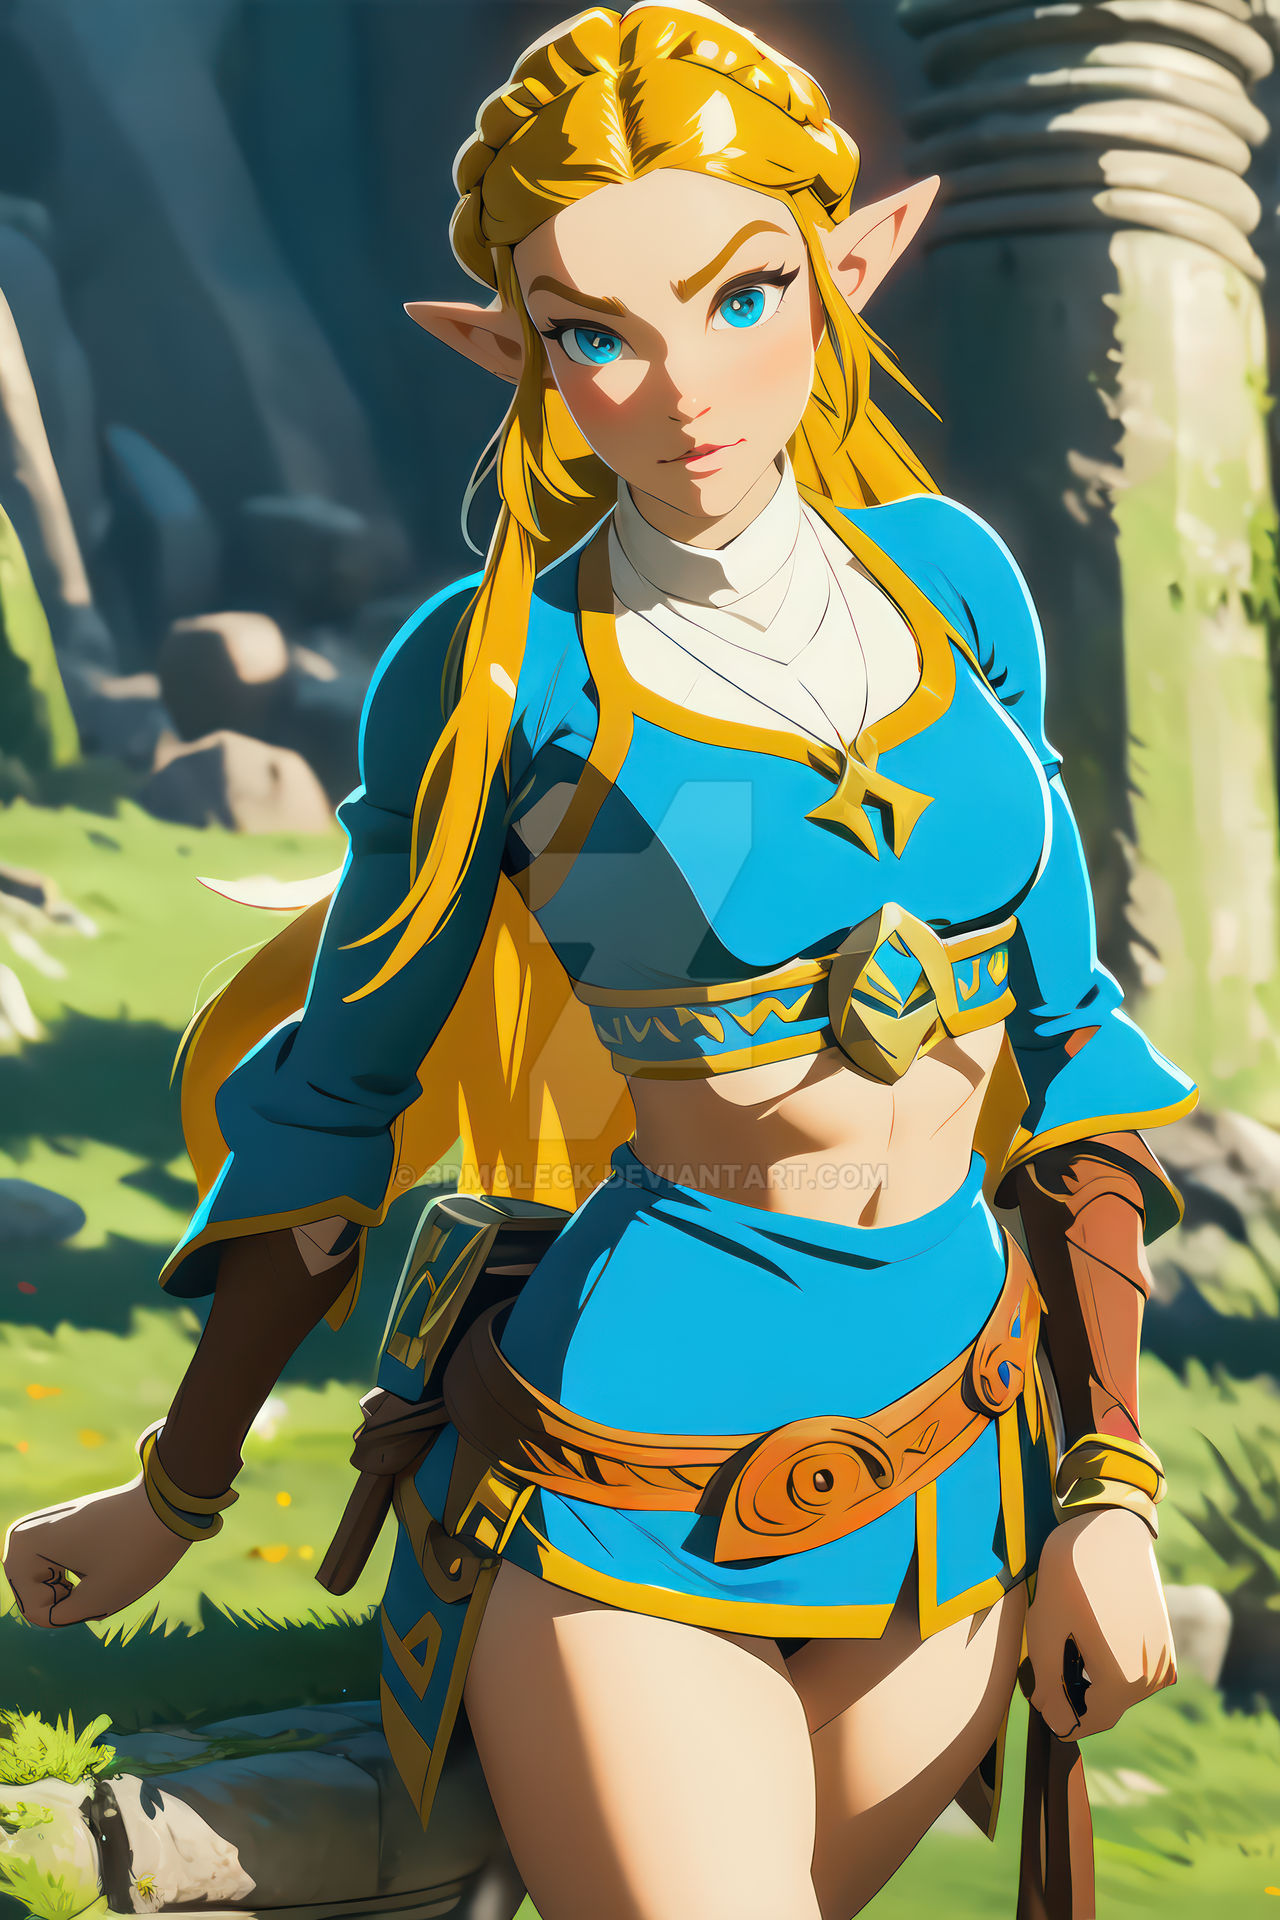 Princess Zelda - Breath of The Wild 2 by GENZOMAN on DeviantArt